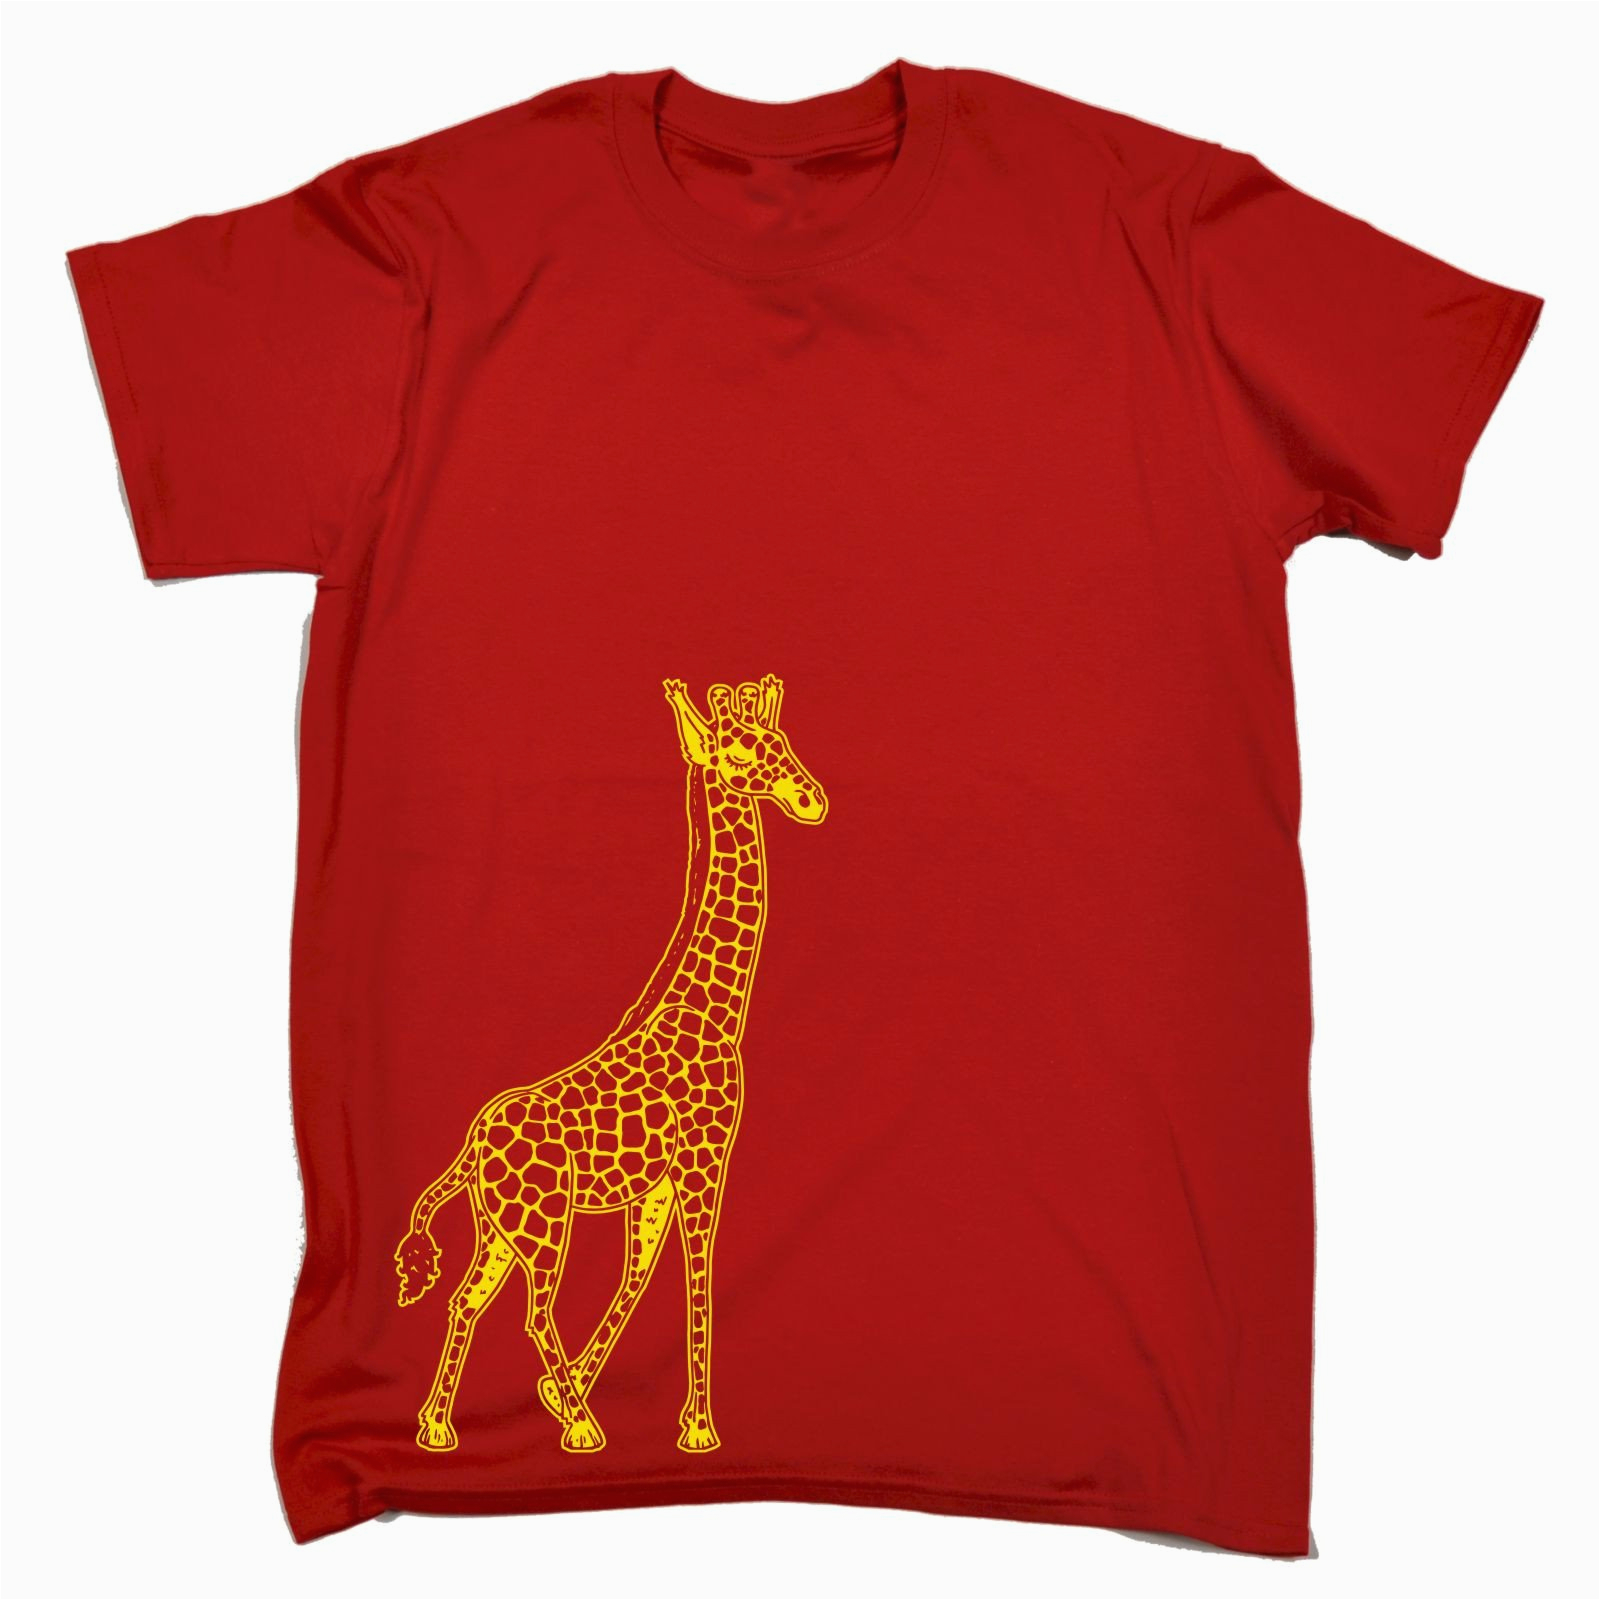 Birthday Present for Him south Africa Giraffe T Shirt Tee Design Africa Animal Funny Birthday